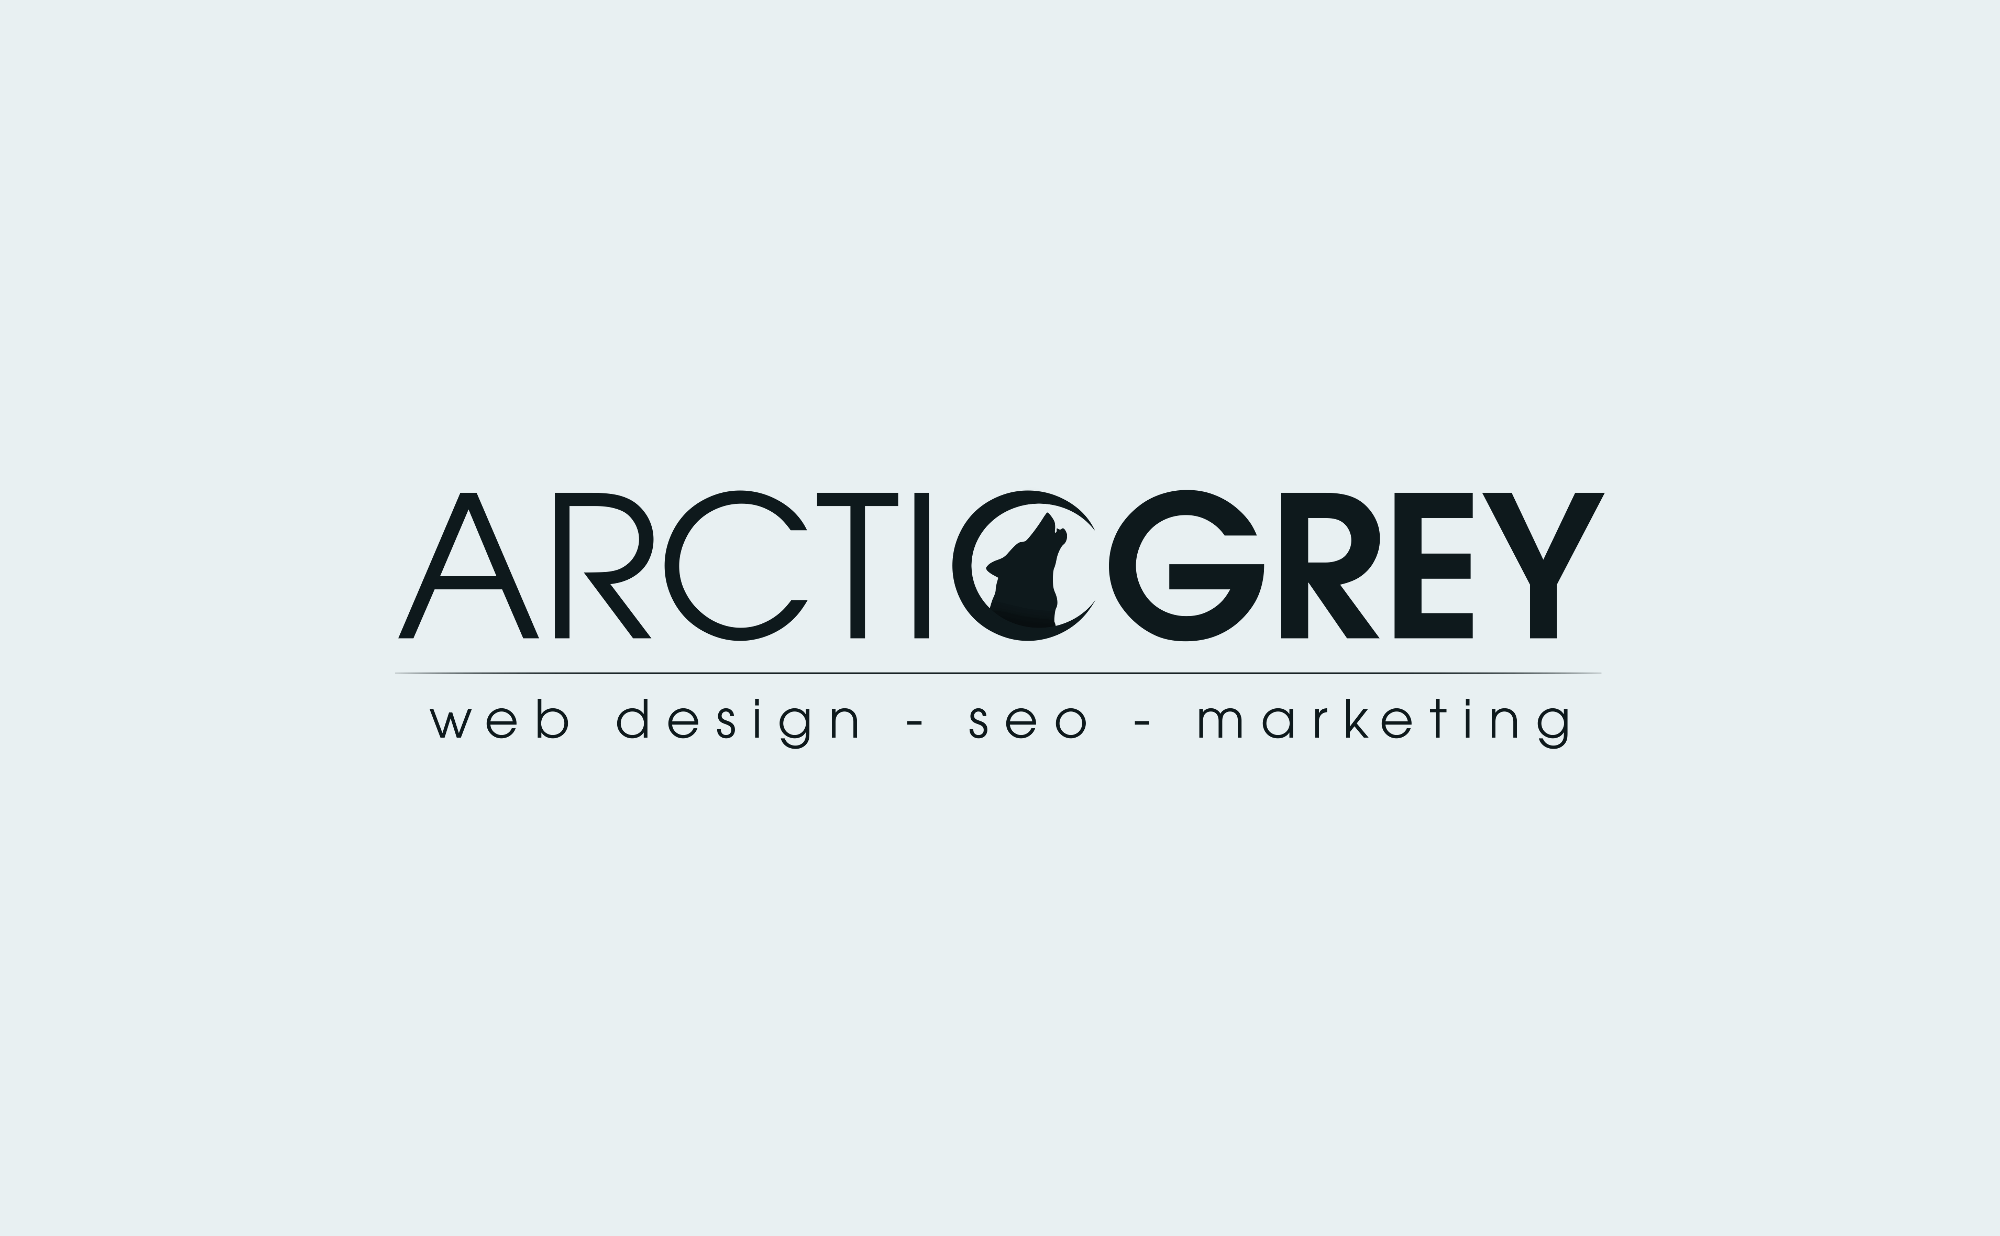 Top Shopify Design Agency Logo: Arctic Grey Inc